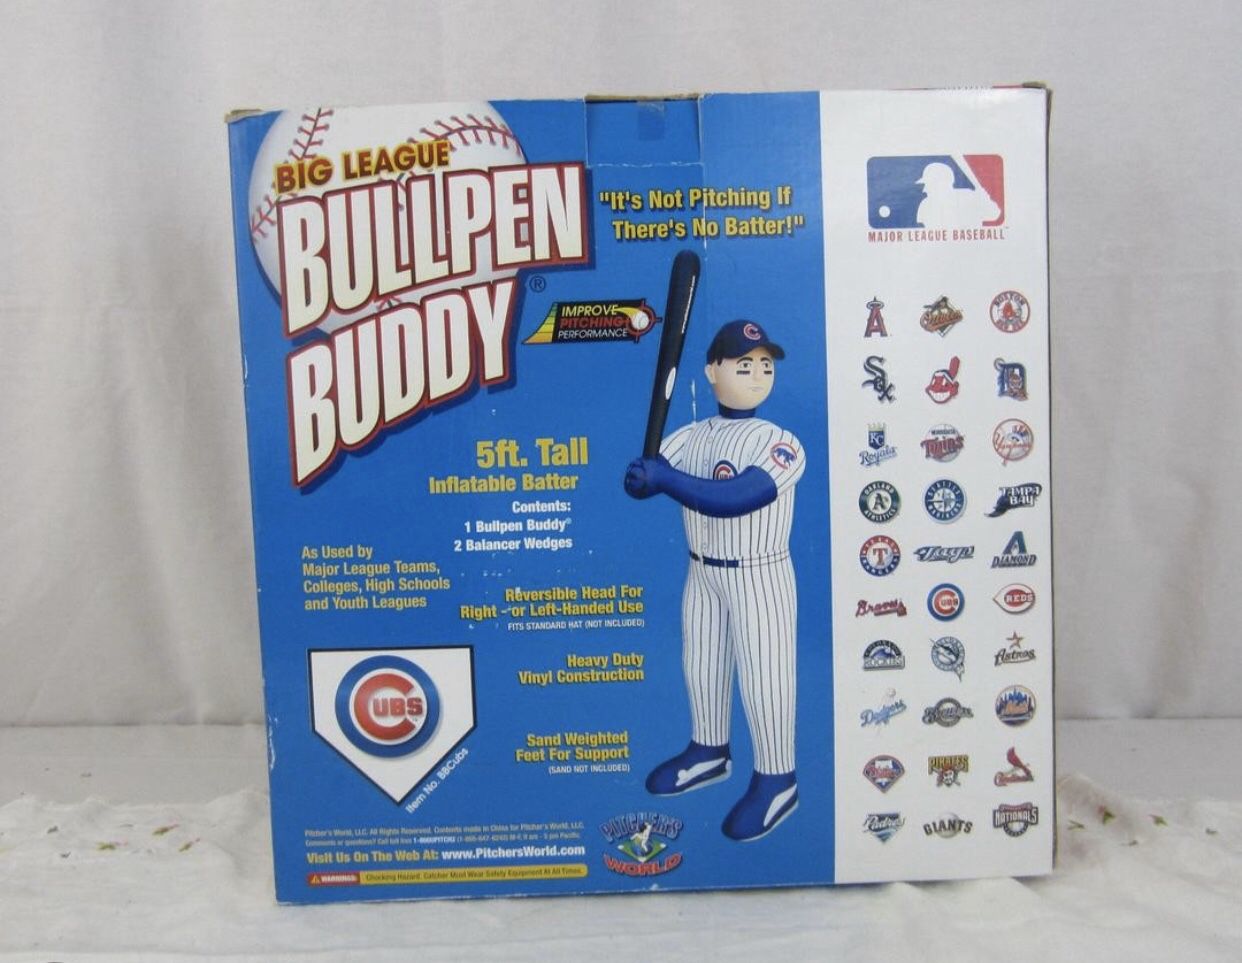 Big League Bullpen Buddy Inflatable Batter Baseball by Pitcher’s World NO BOX